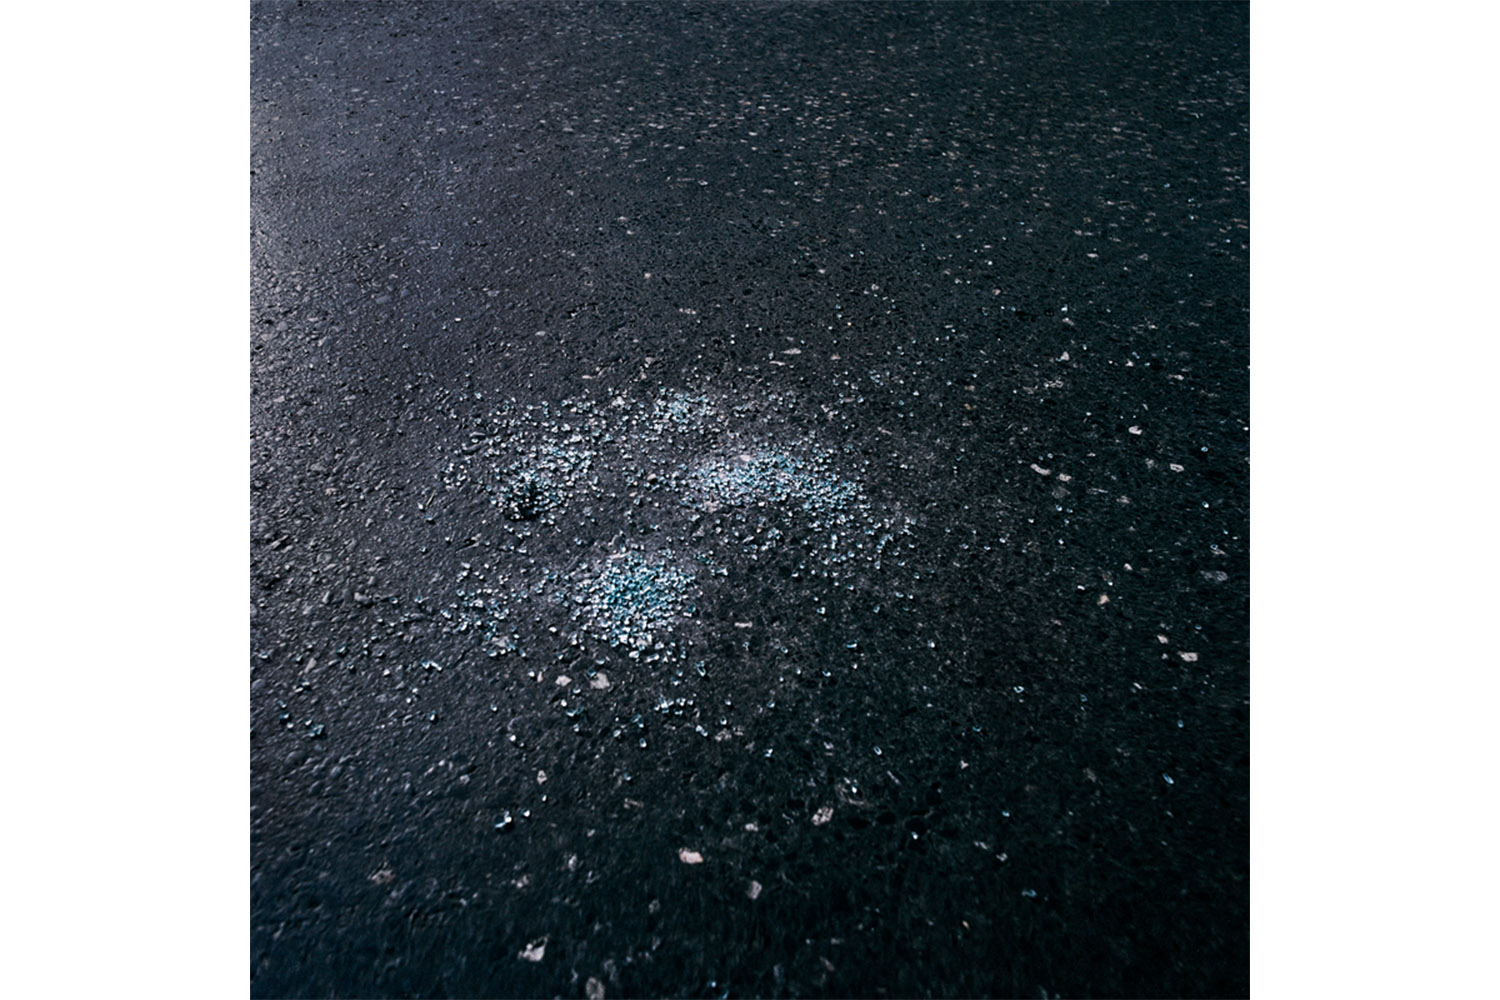 ALI TAPTIK, Untitled, 2009